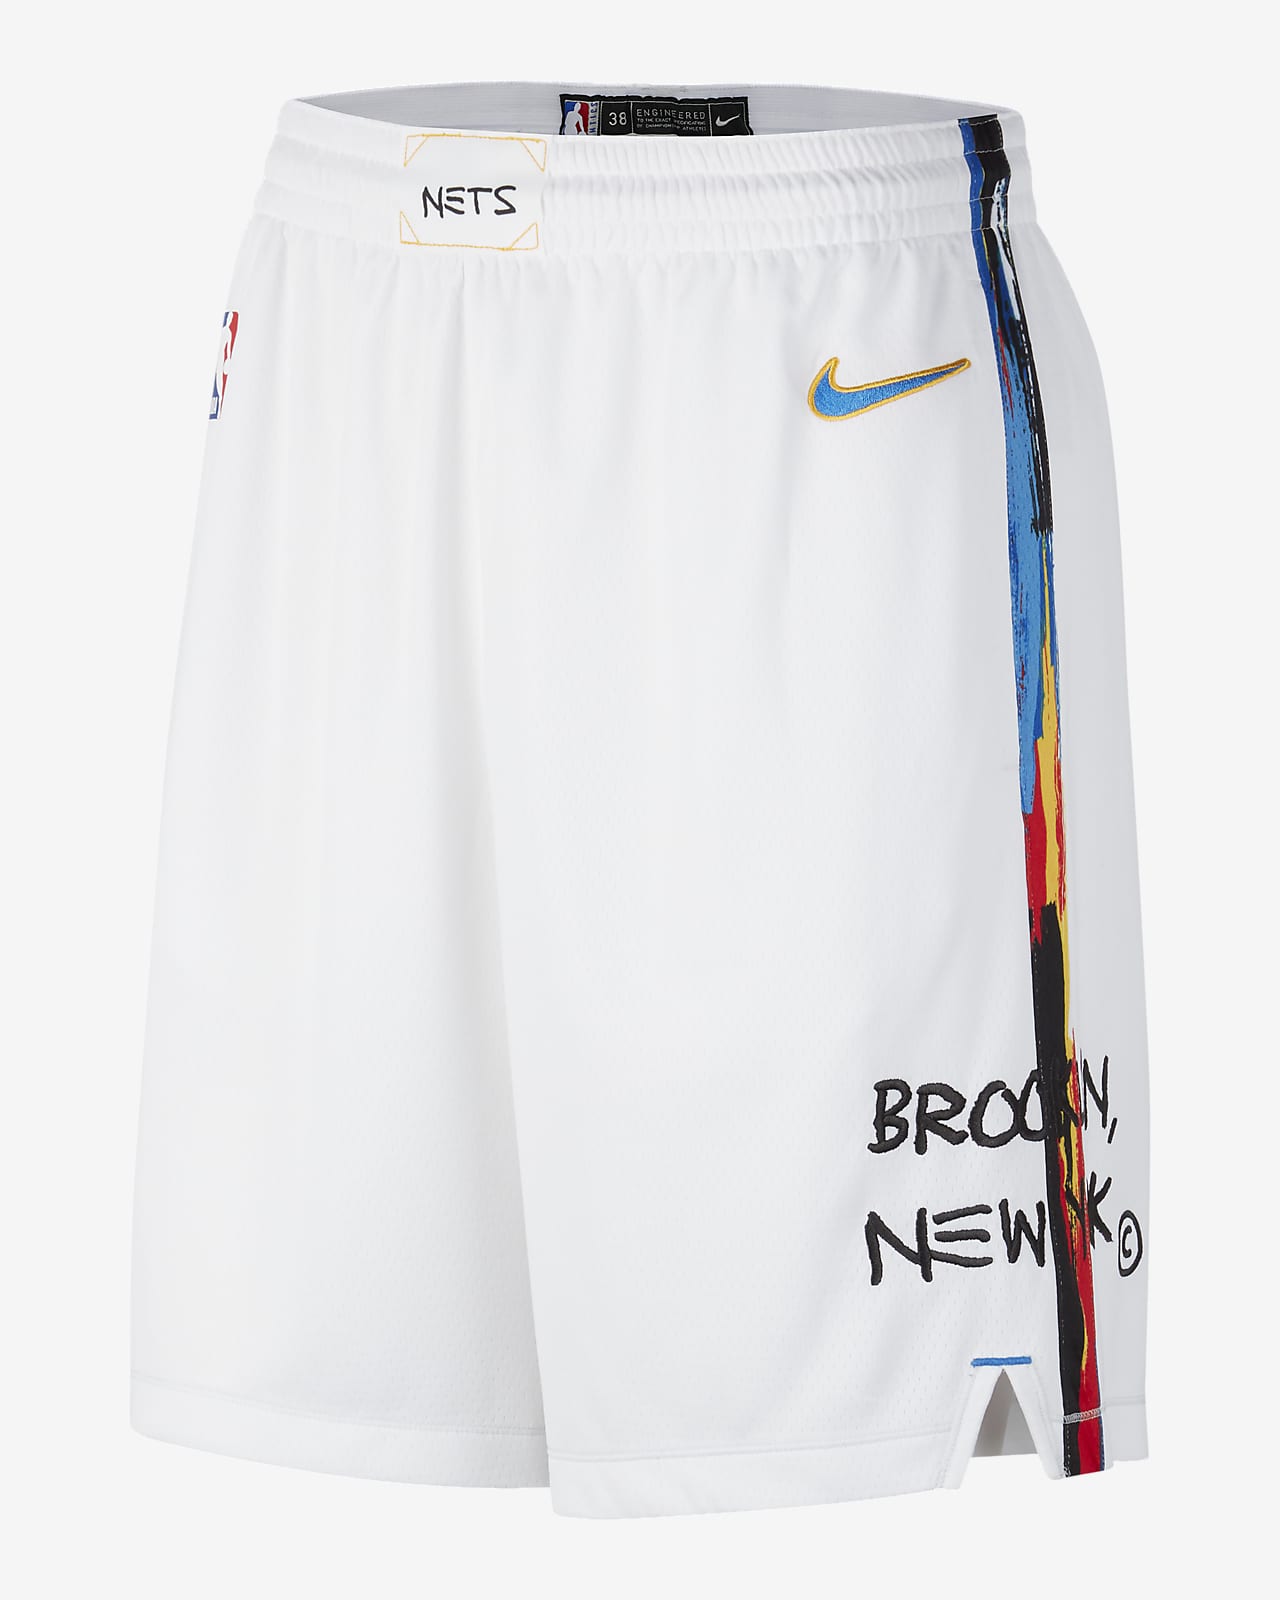 nets city edition shorts